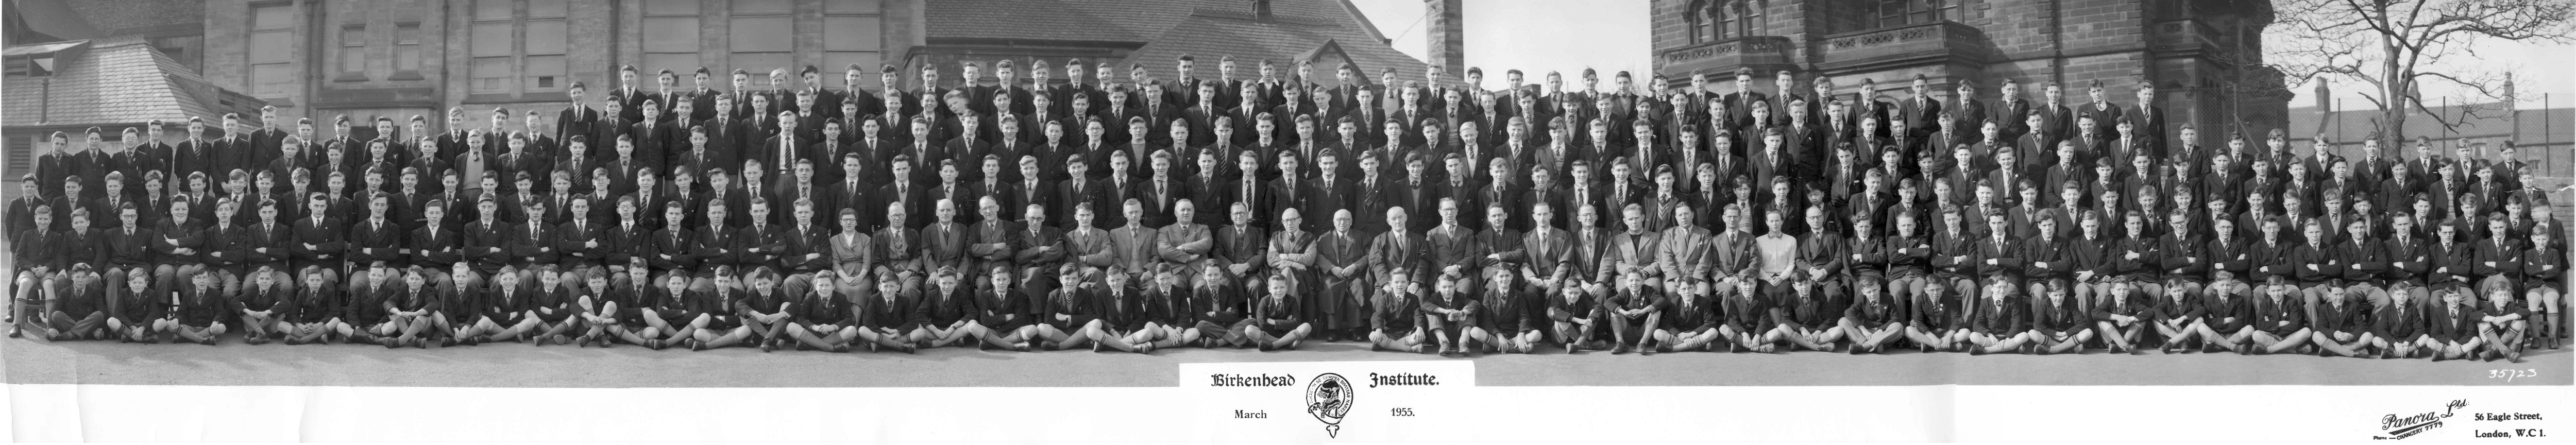 Whole School Photograph - 1955